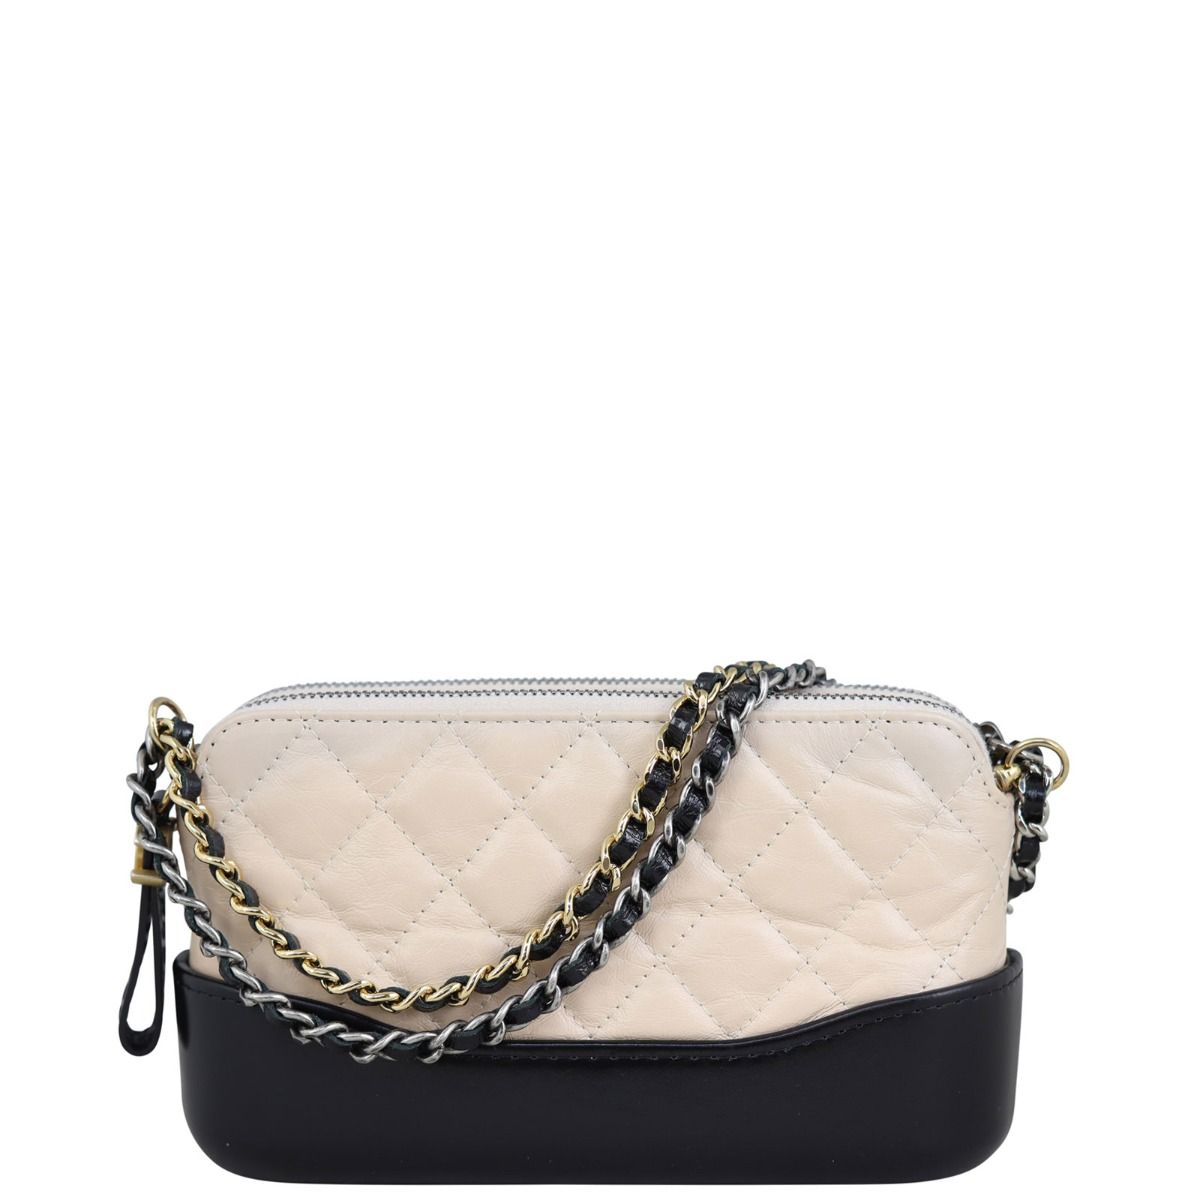 Chanel Gabrielle Clutch Bag